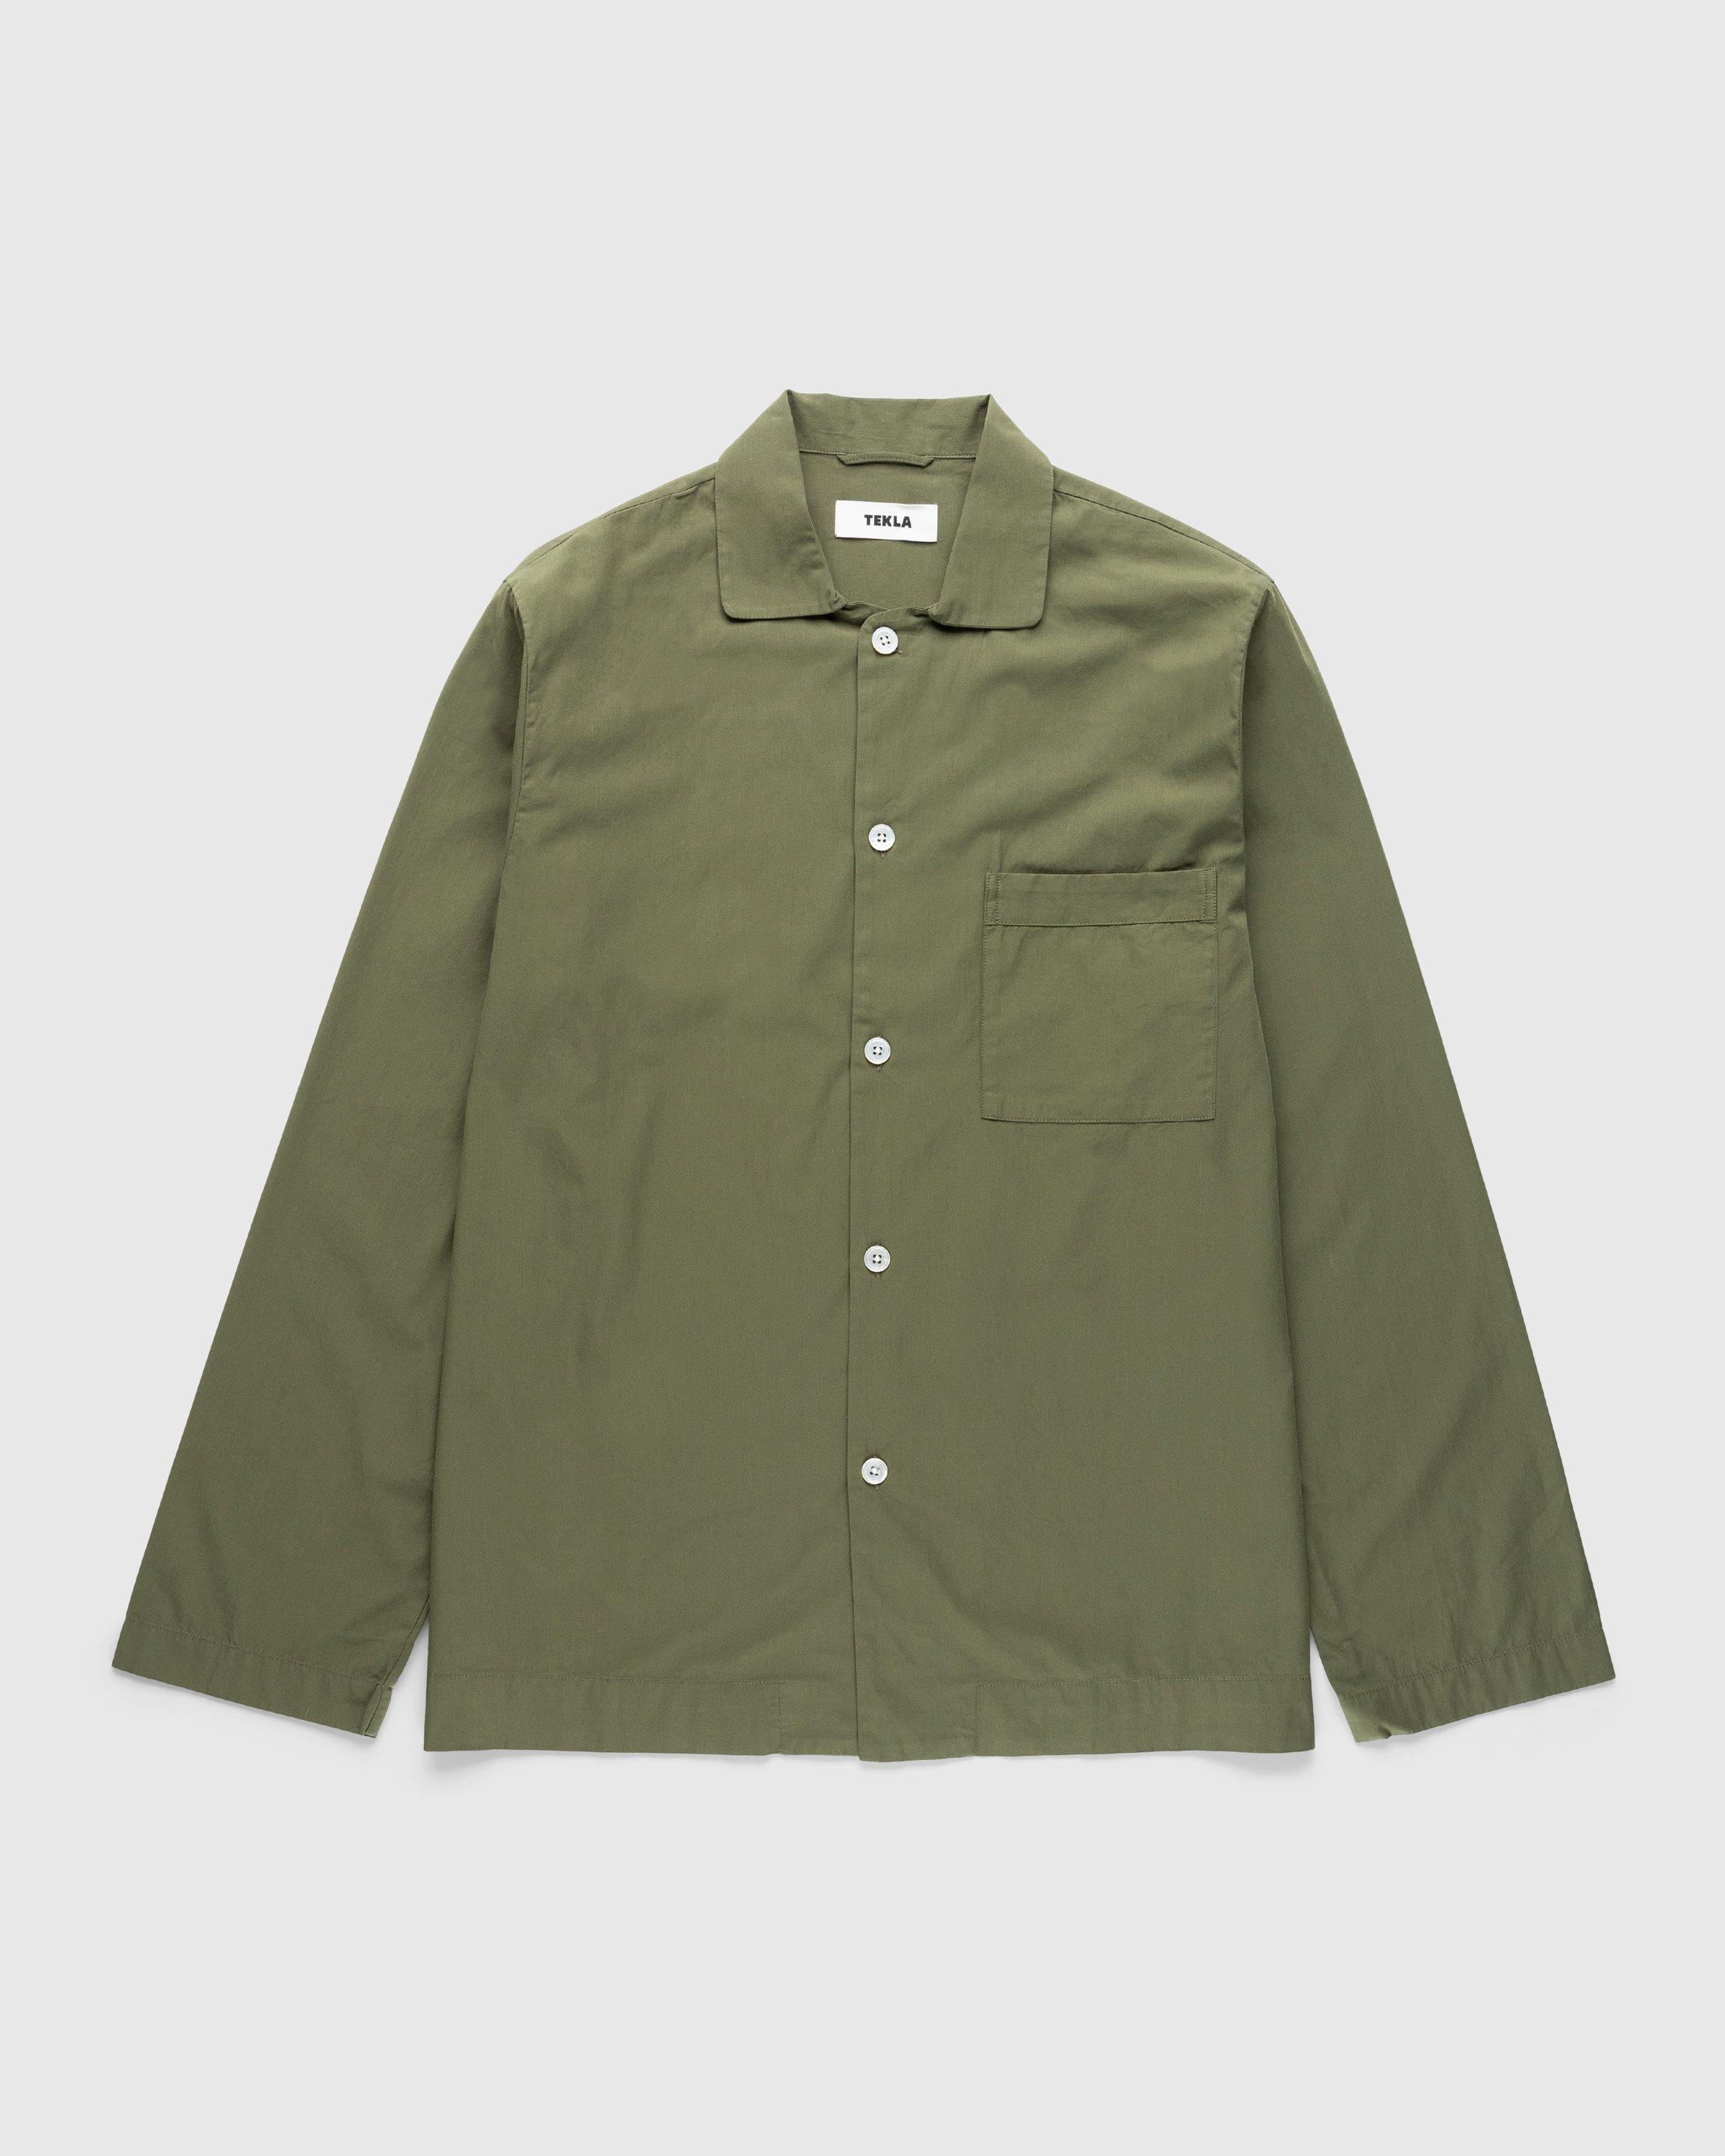 Tekla - Cotton Poplin Pyjamas Shirt Willow - Clothing - Green - Image 1